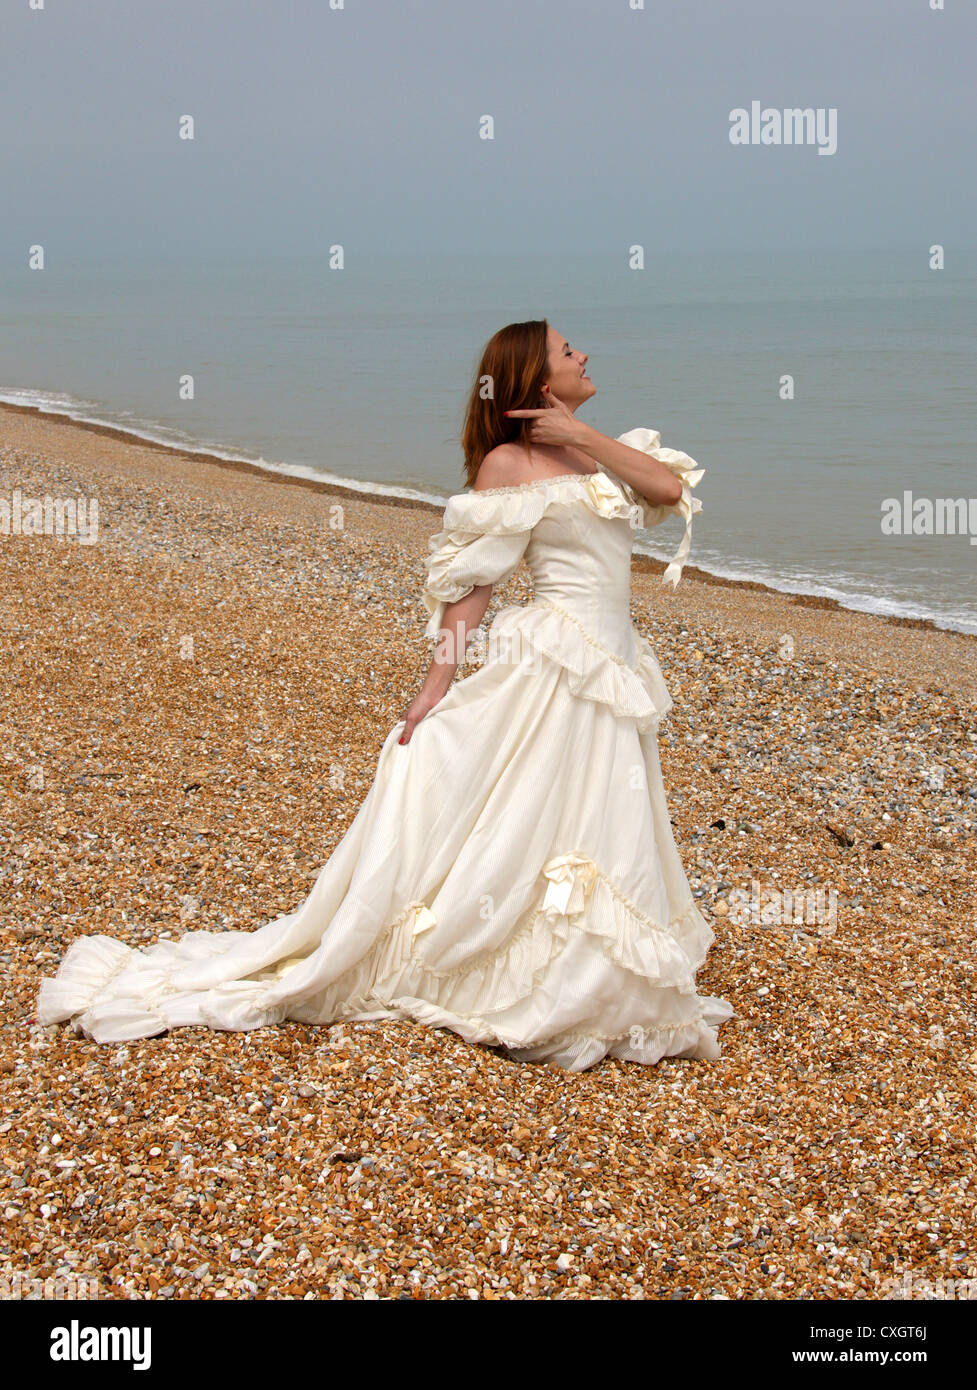 Girl Wearing a Cream White Wedding Dress on a Shingle Beach by the Sea. Stock Photo